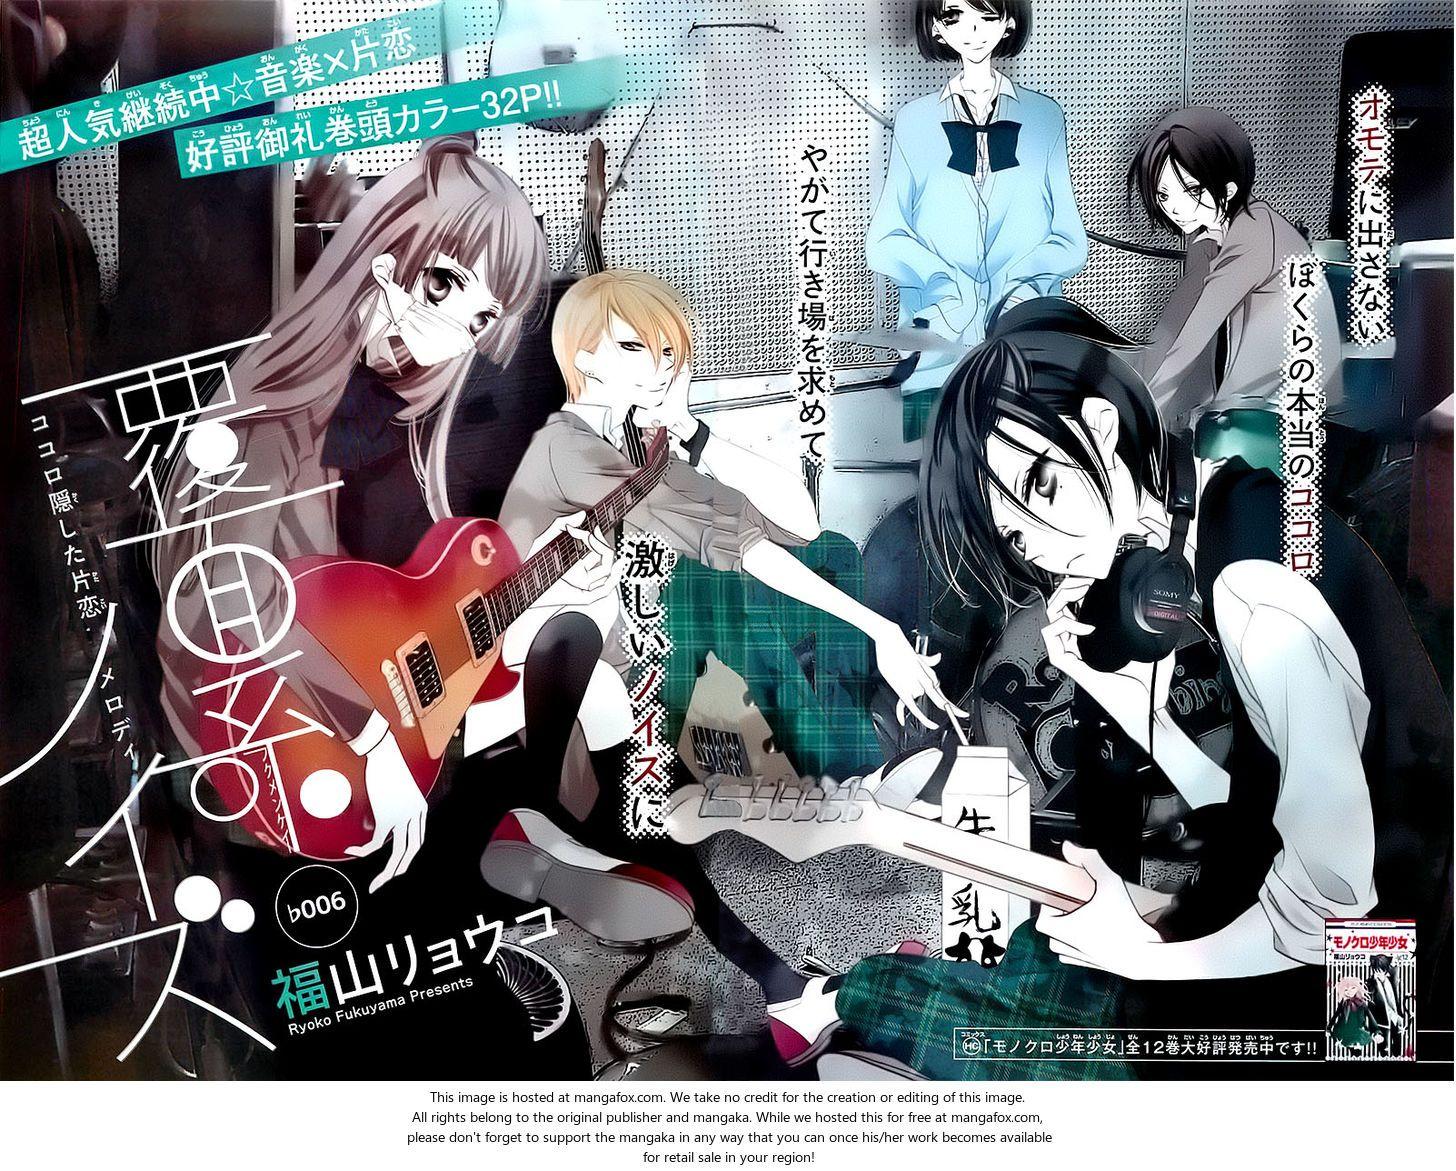 Anime Fukumenkei Noise wallpaper (Desktop, Phone, Tablet)